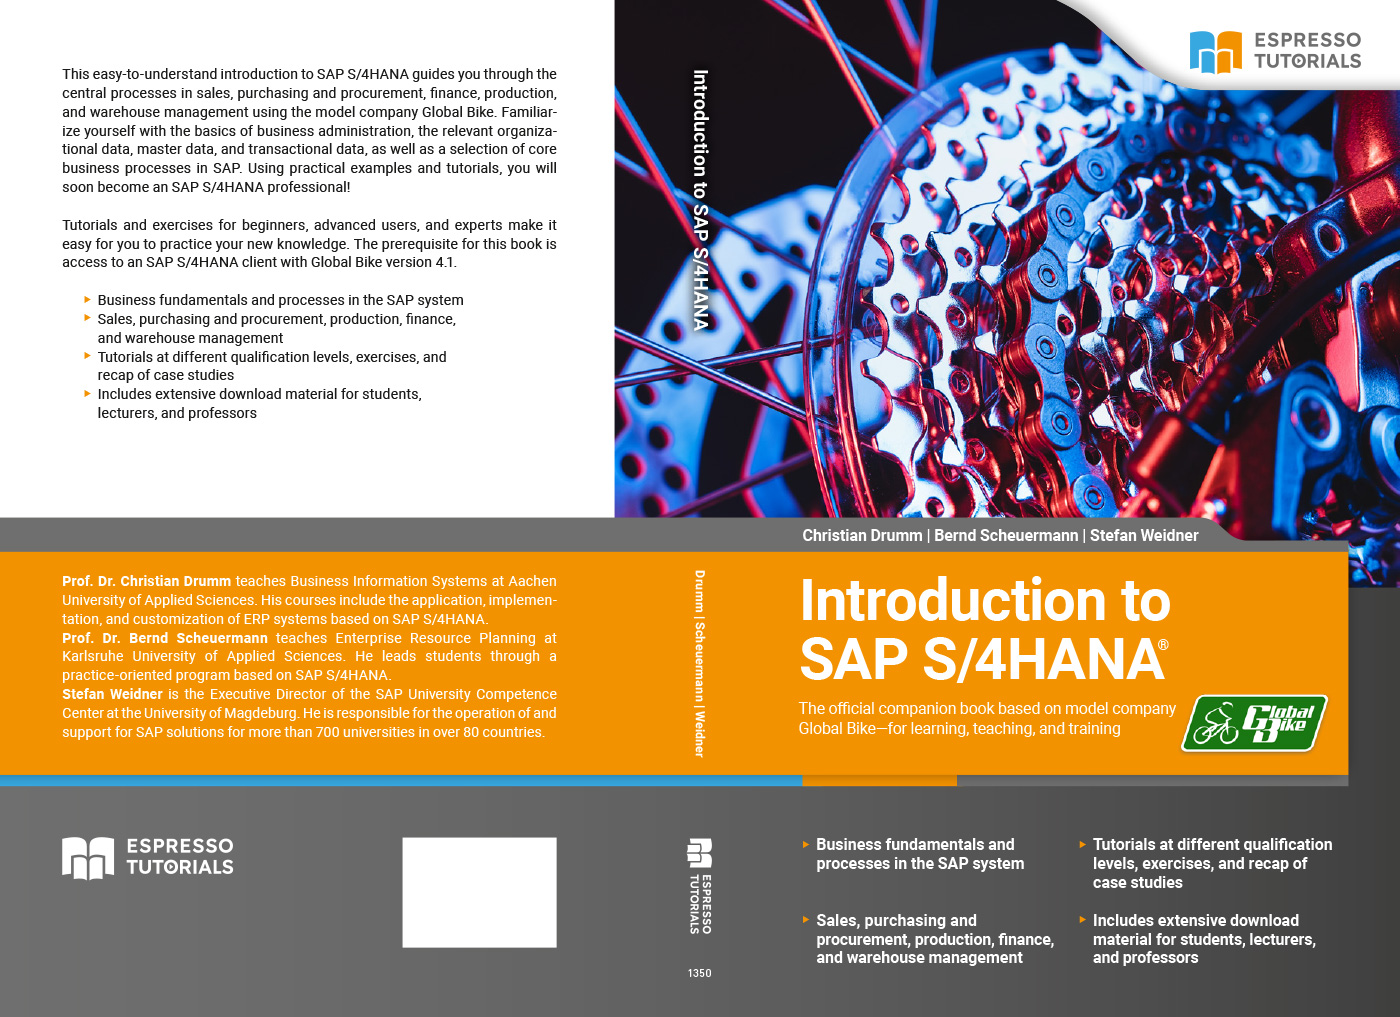 Introduction to SAP S/4HANA